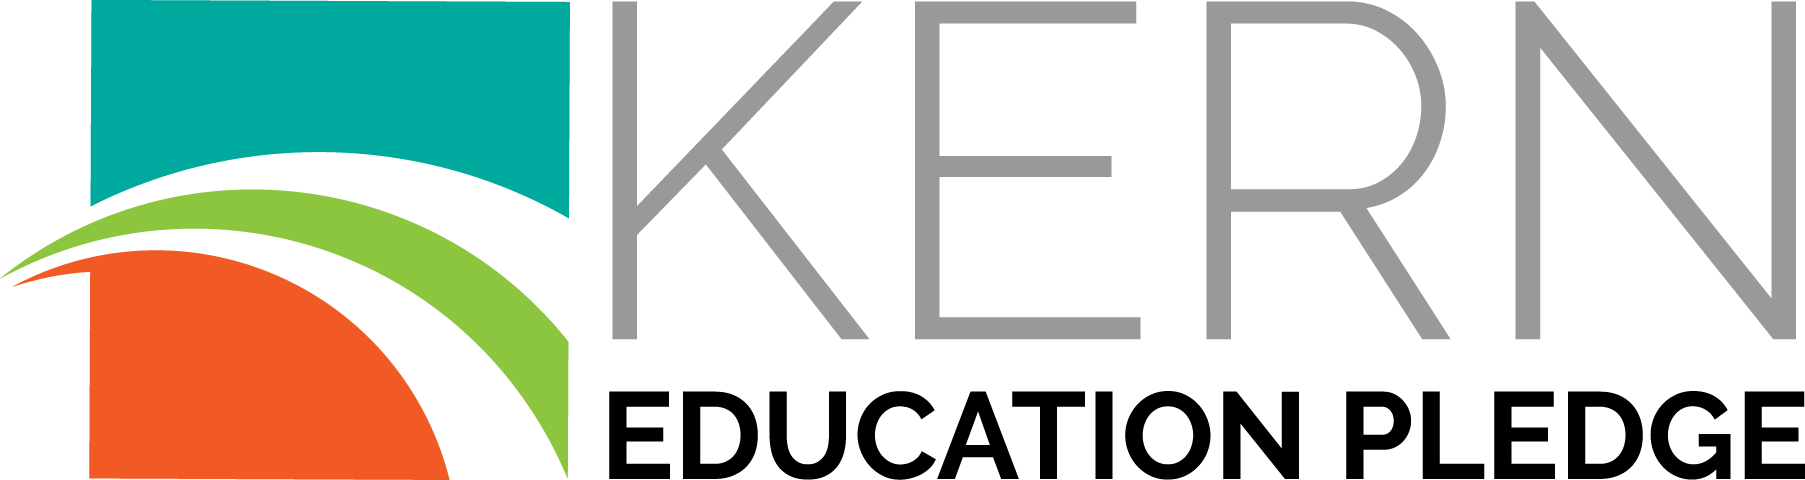 Kern Education Pledge Logo